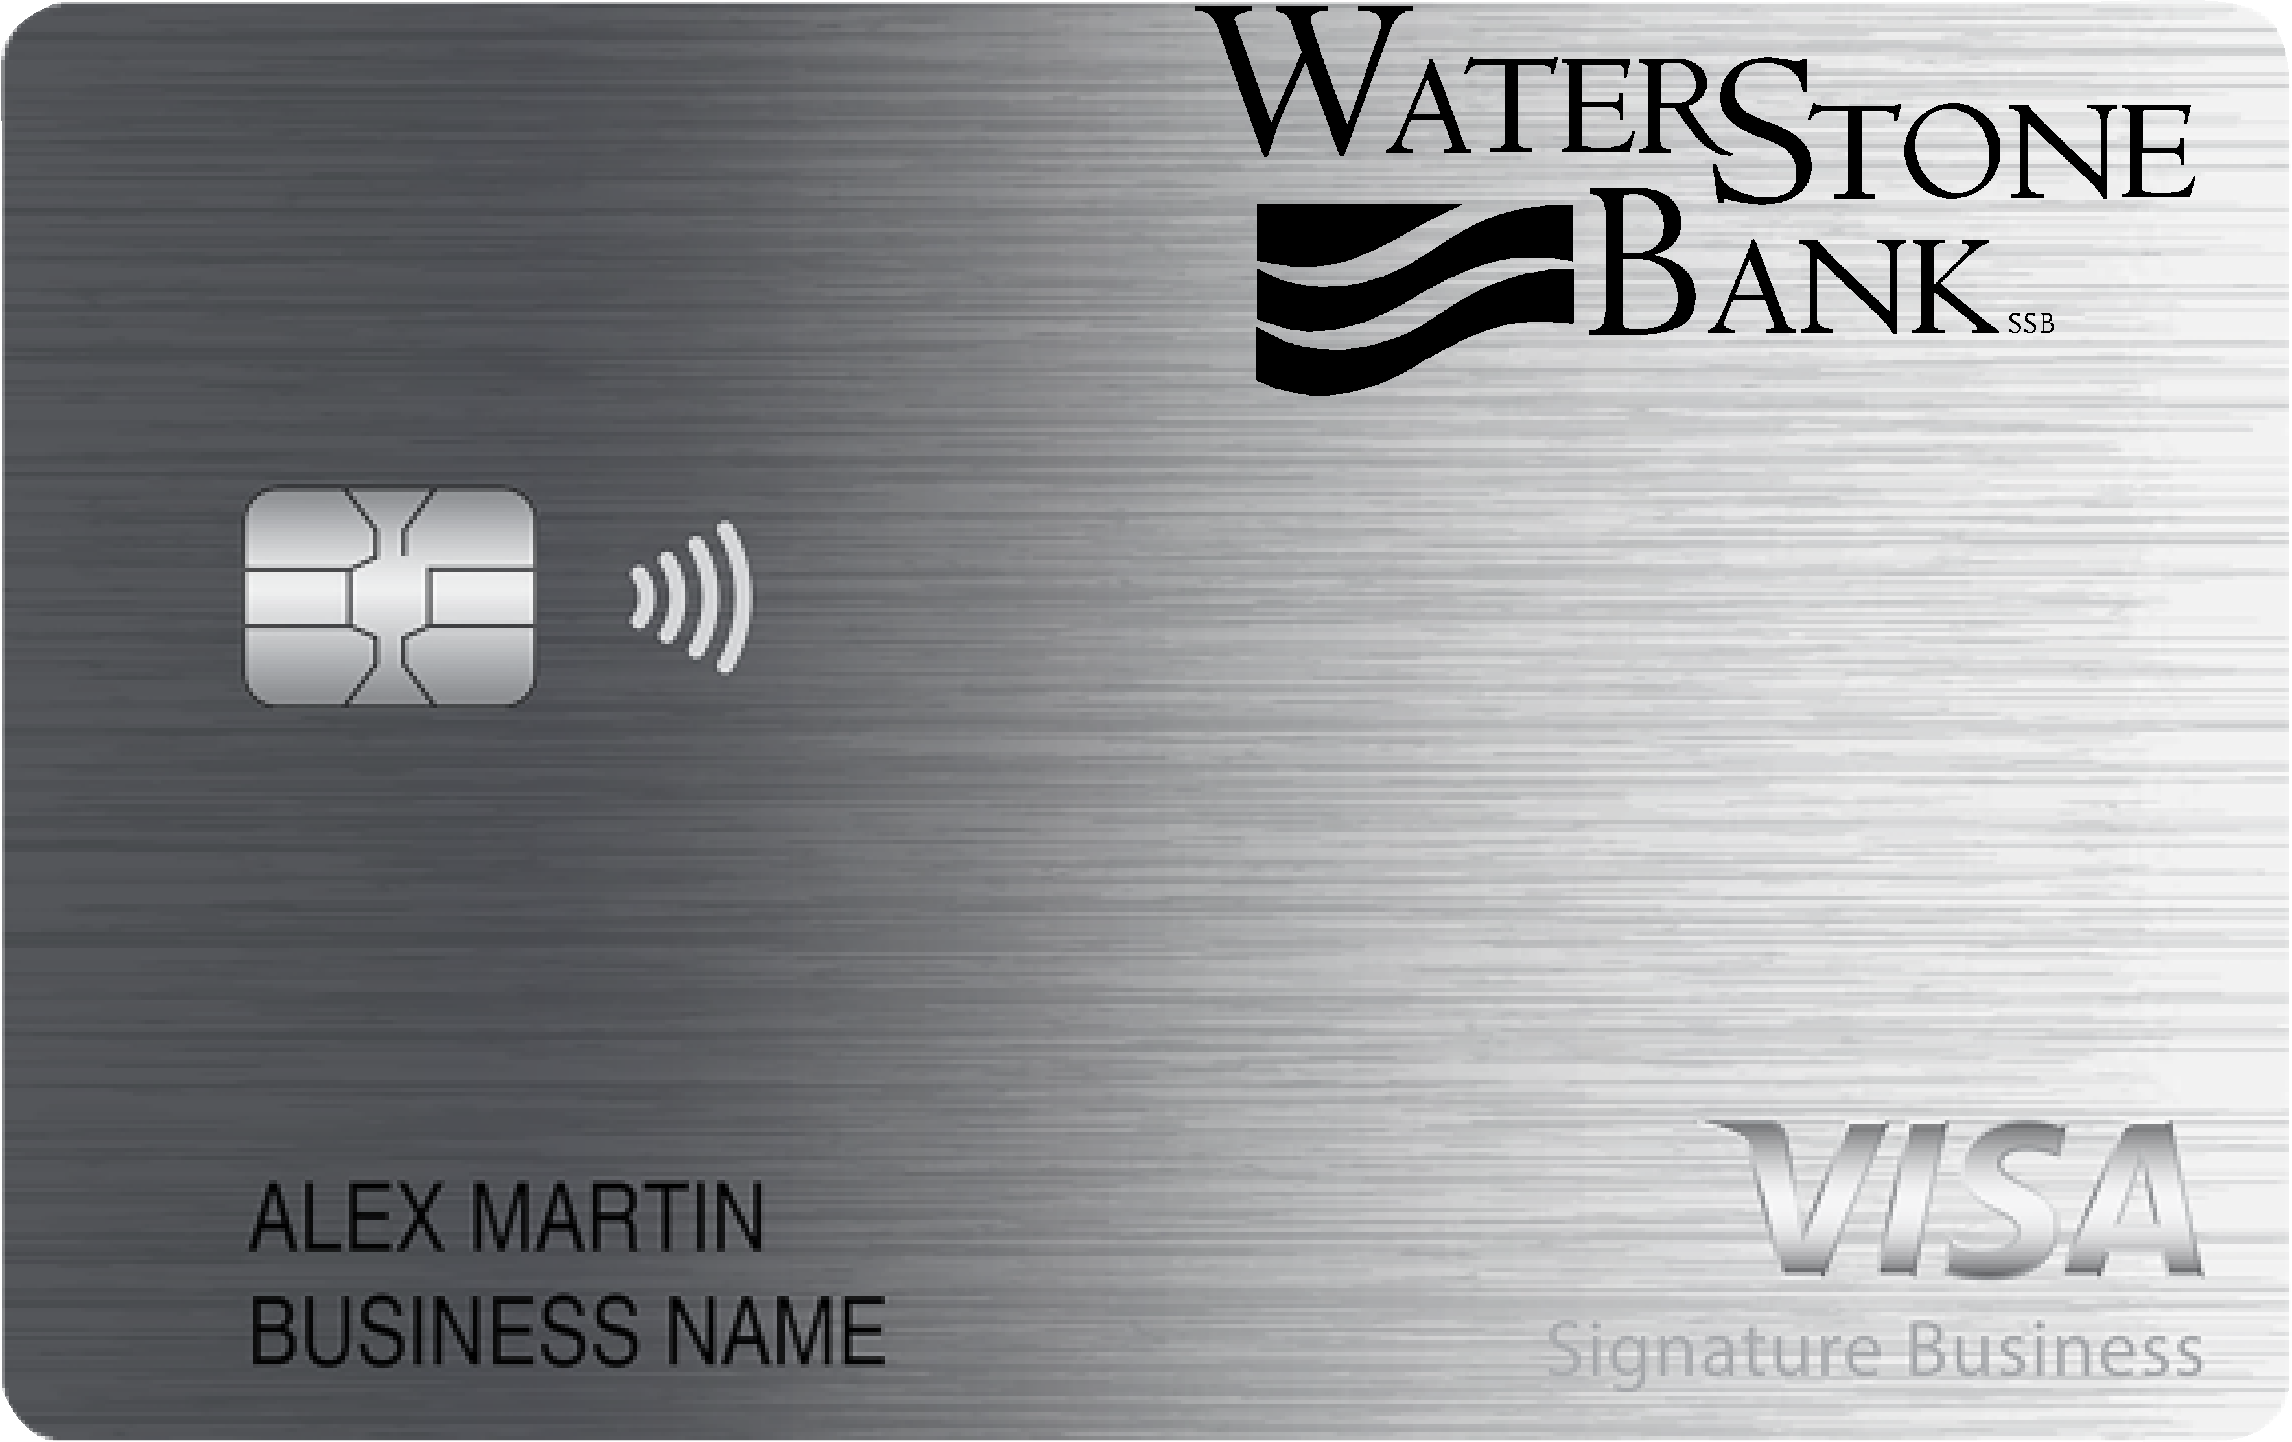 WaterStone Bank Smart Business Rewards Card